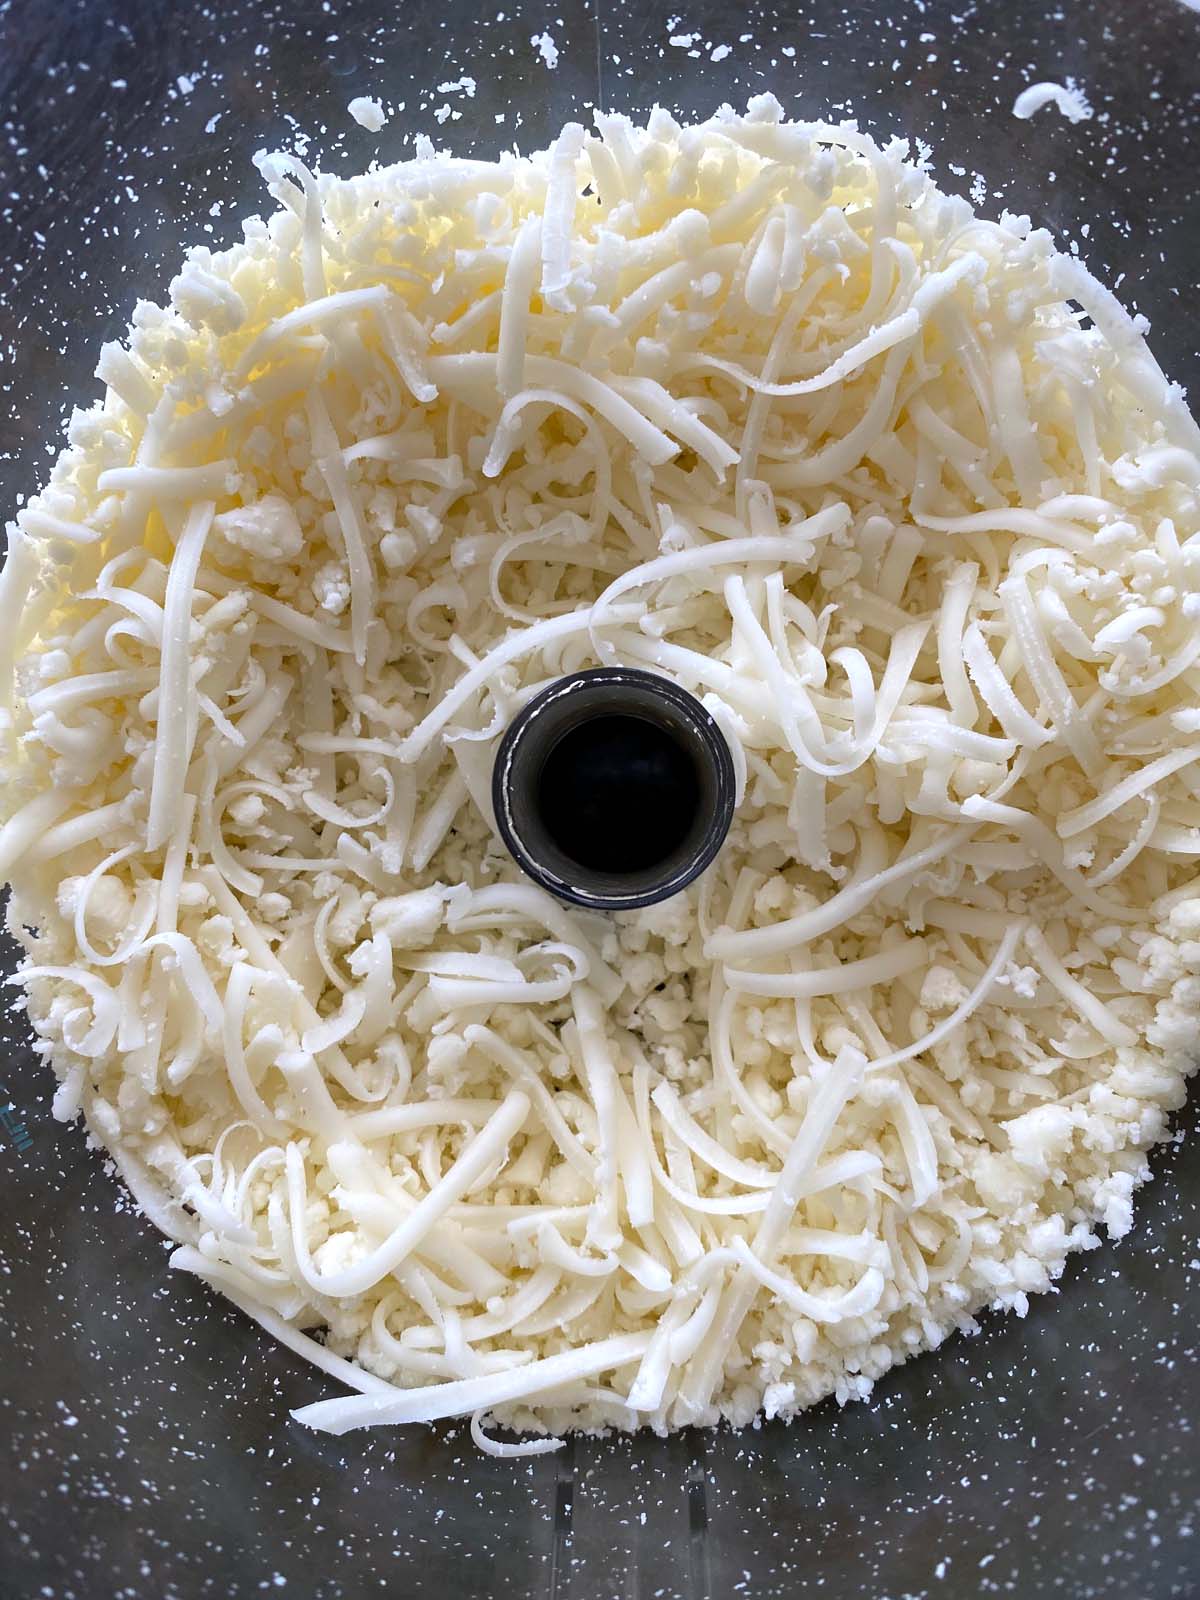 https://www.melaniecooks.com/wp-content/uploads/2021/10/shredded-cheese-in-food-processor-8.jpg